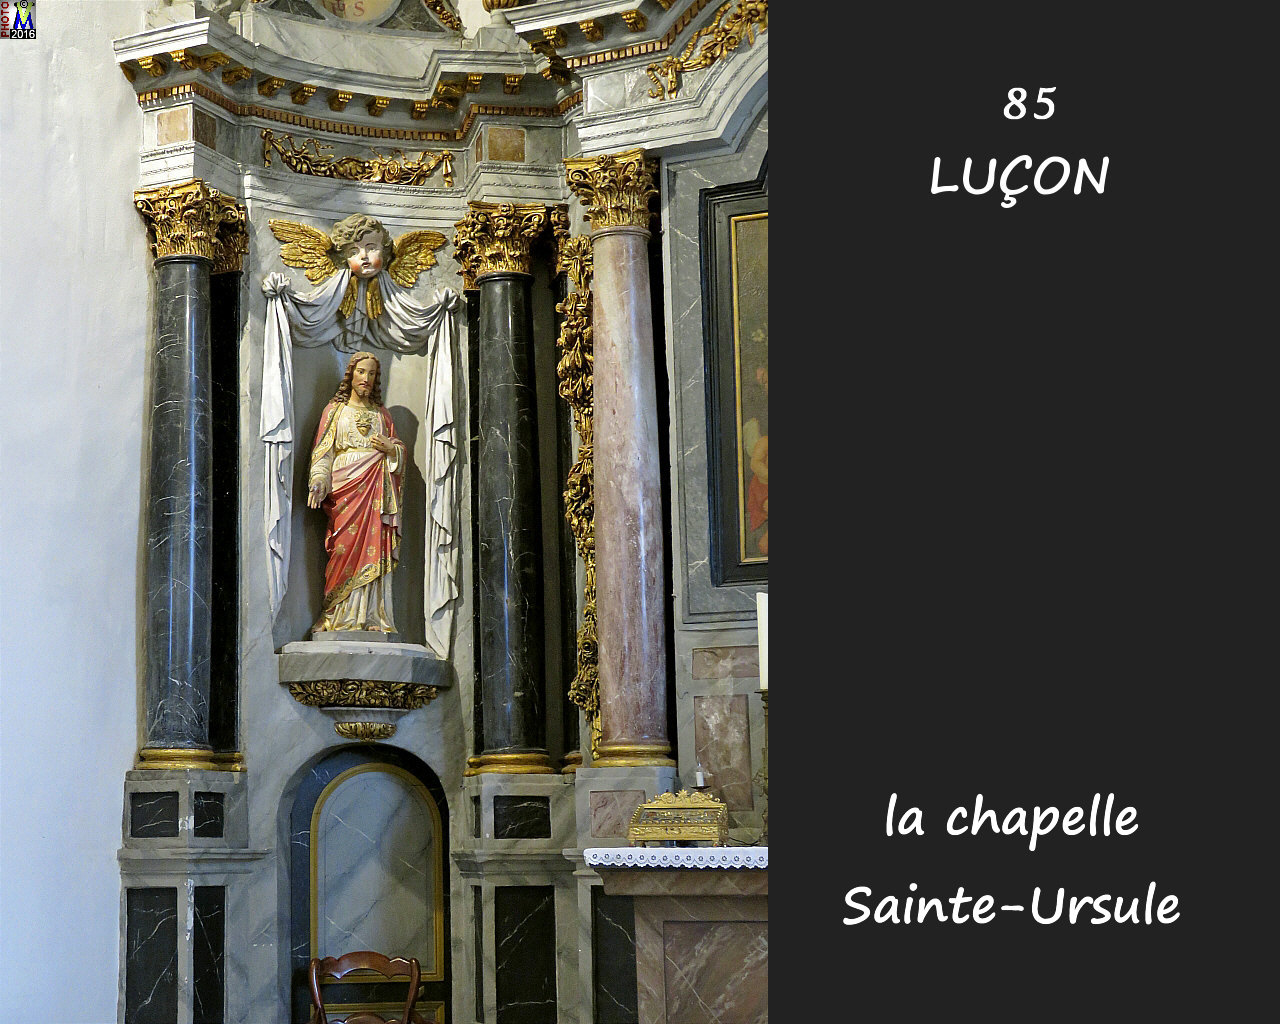 85LUCON_chapelle-ursule_1216.jpg